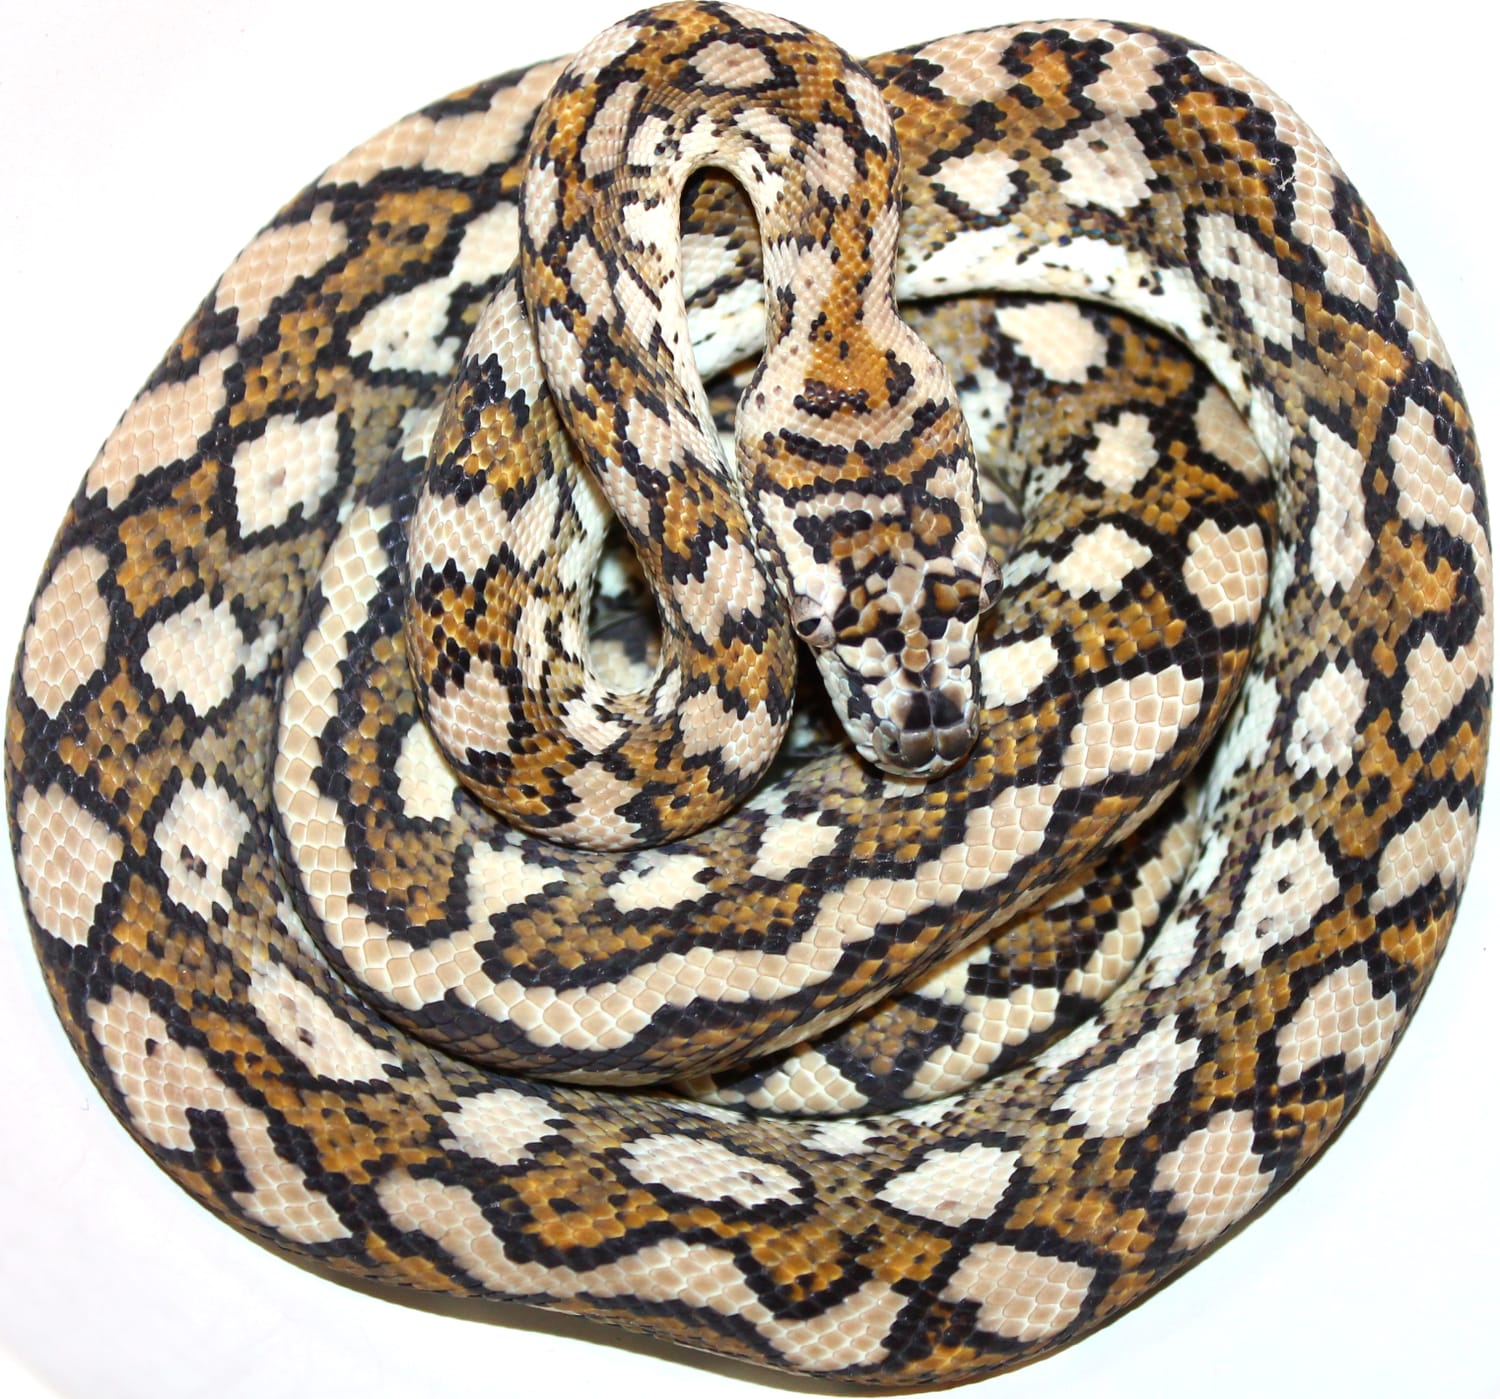 True Hypomelanistic Coastal Carpet Python by Inland Reptile